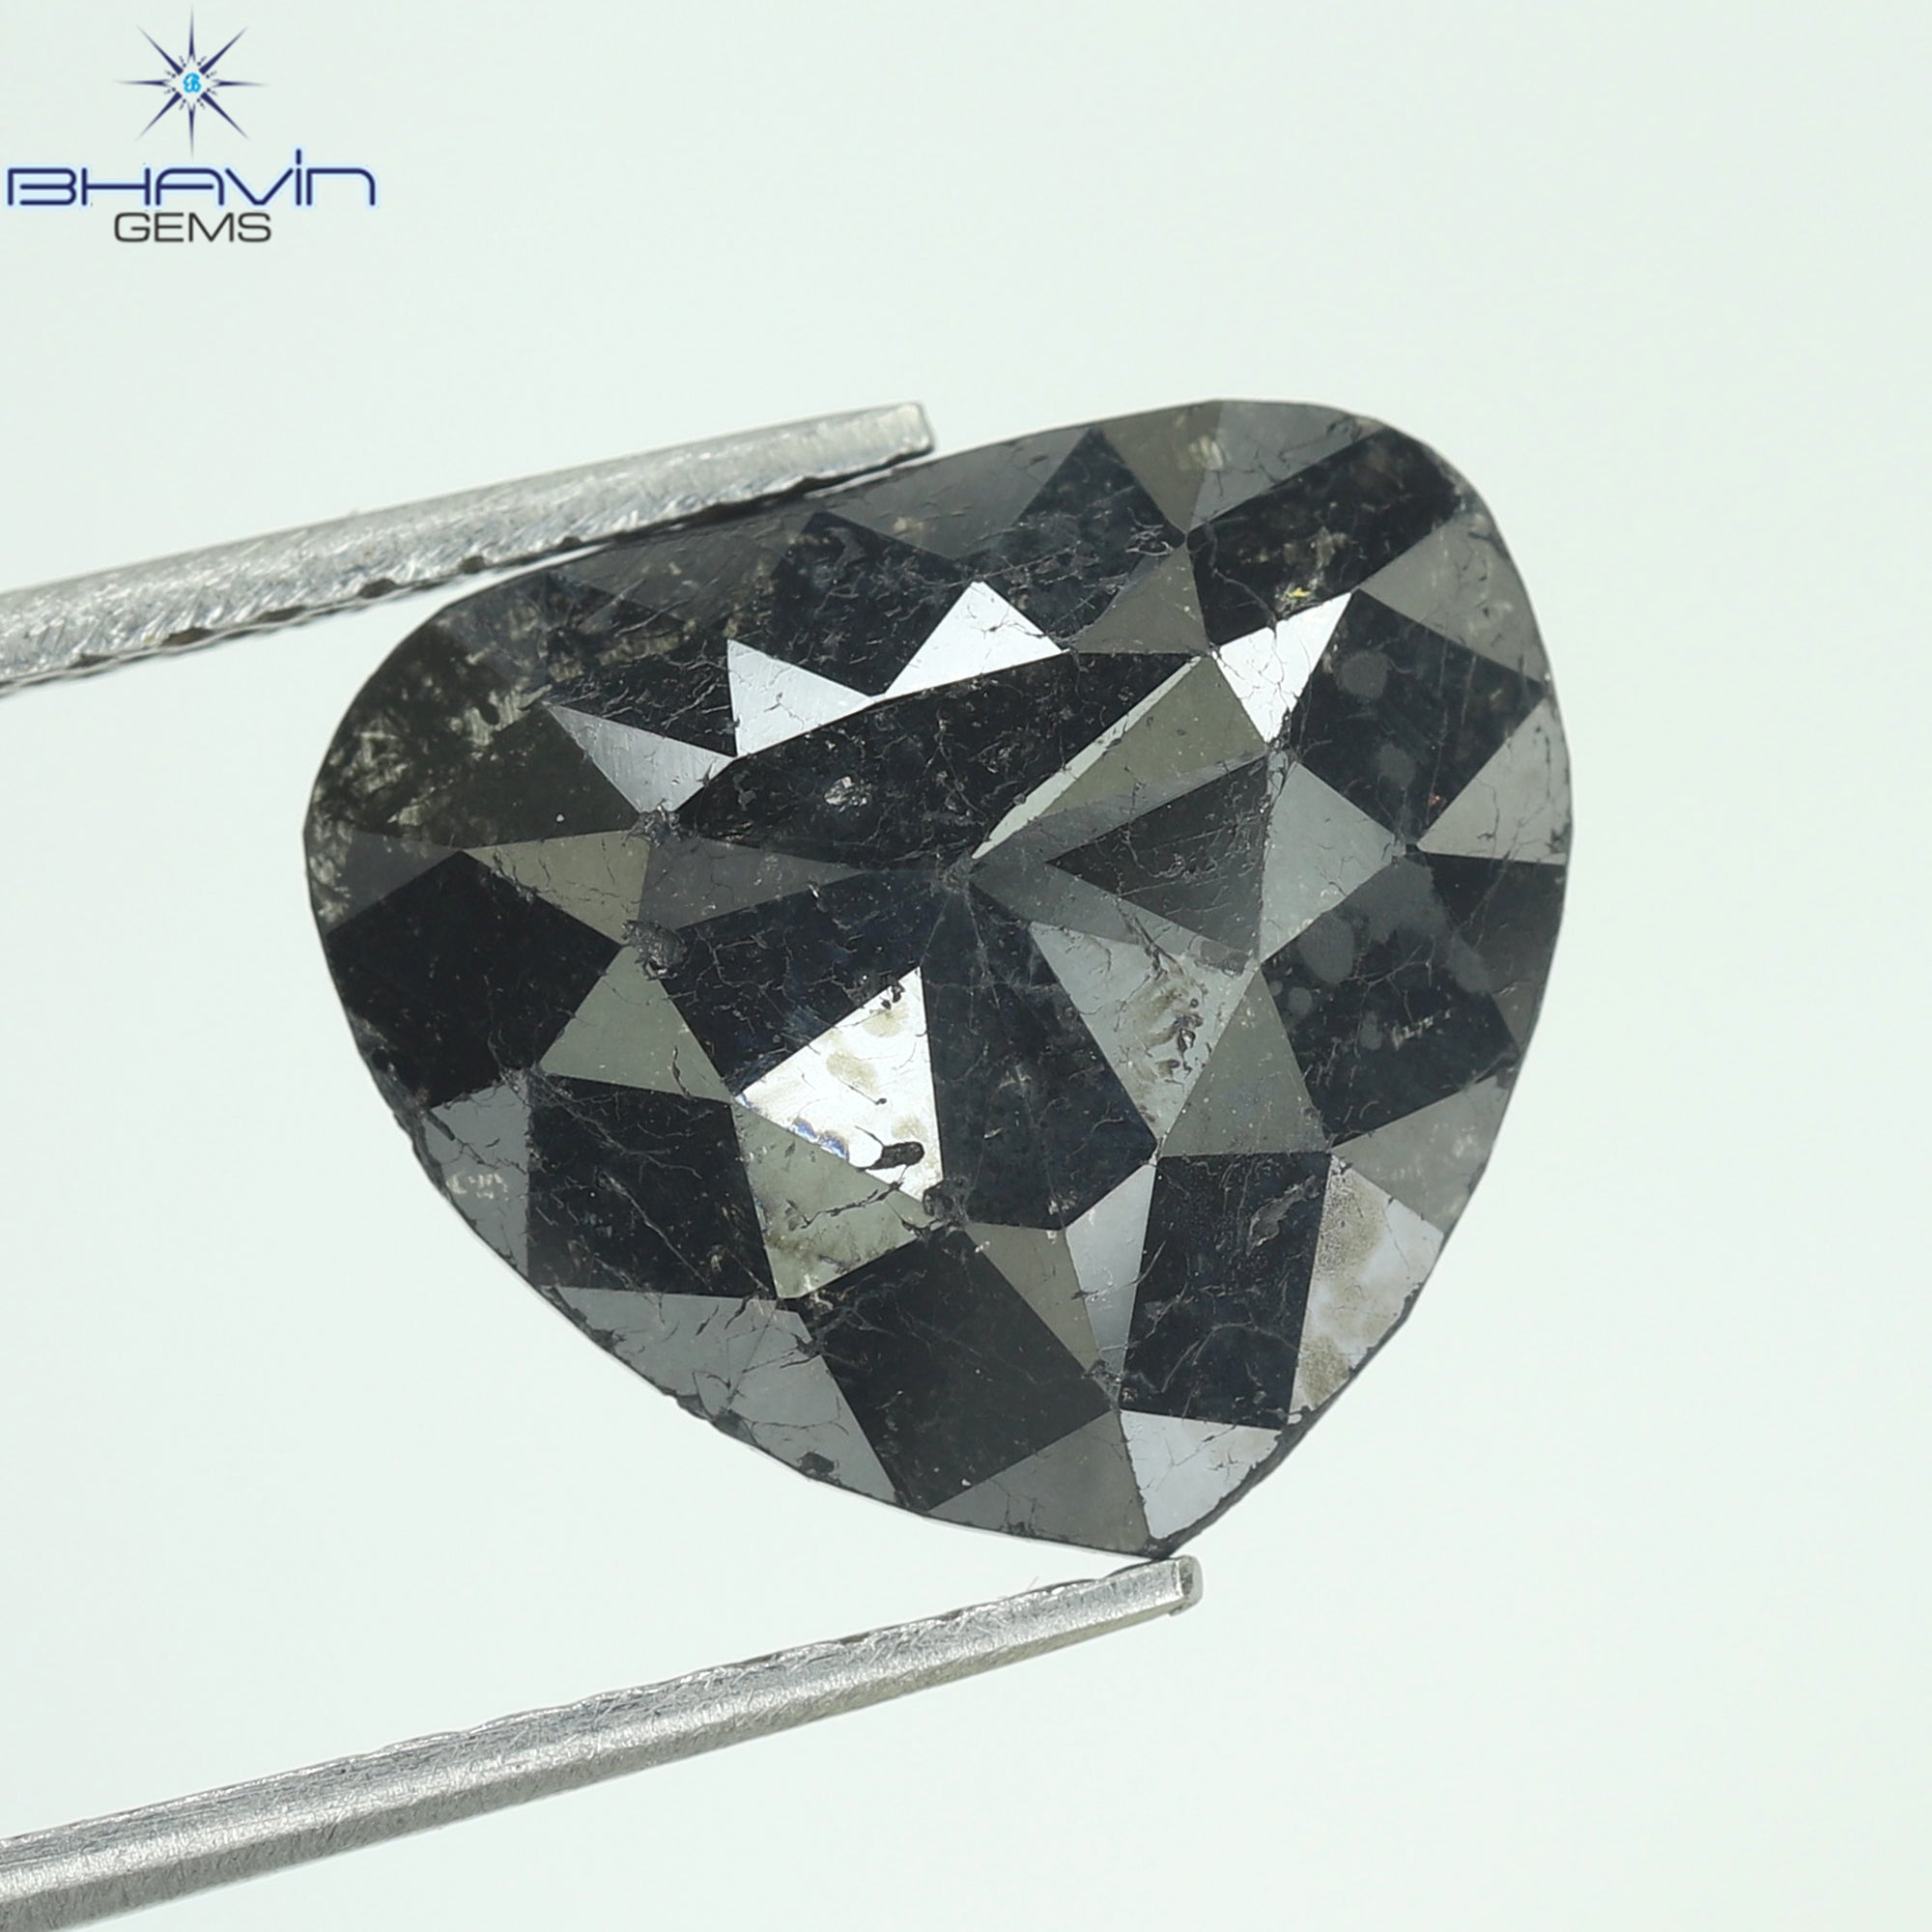 2.27 CT Heart Shape Natural Diamond Black Color I3 Clarity (11.42 MM)